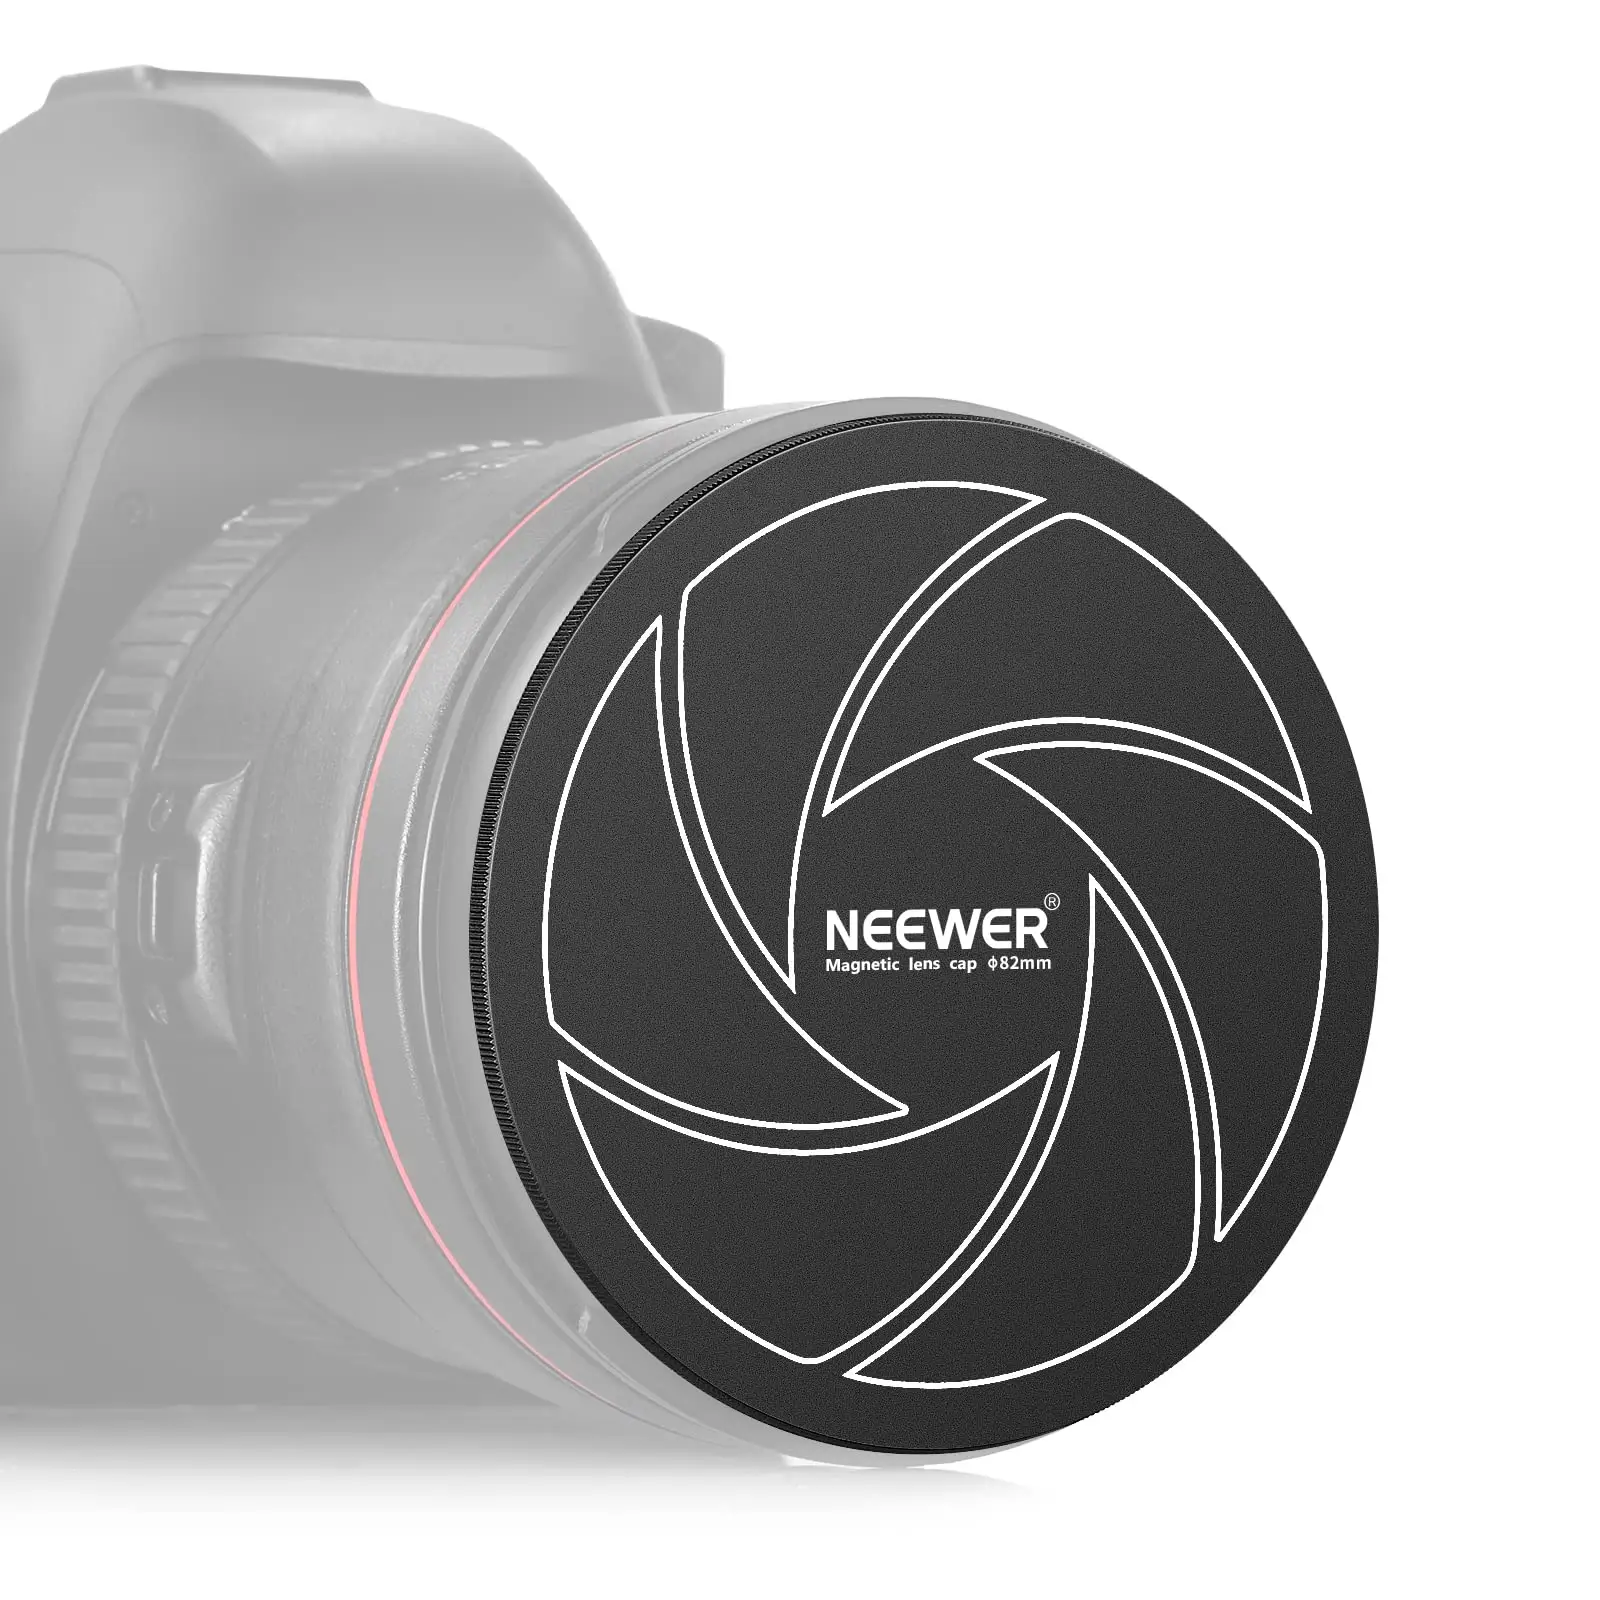 Aksesori kamera Digital NEEWER tutup lensa aluminium magnetik 82mm dengan tutup pelindung benang 82mm untuk lensa kamera SLR DSLR